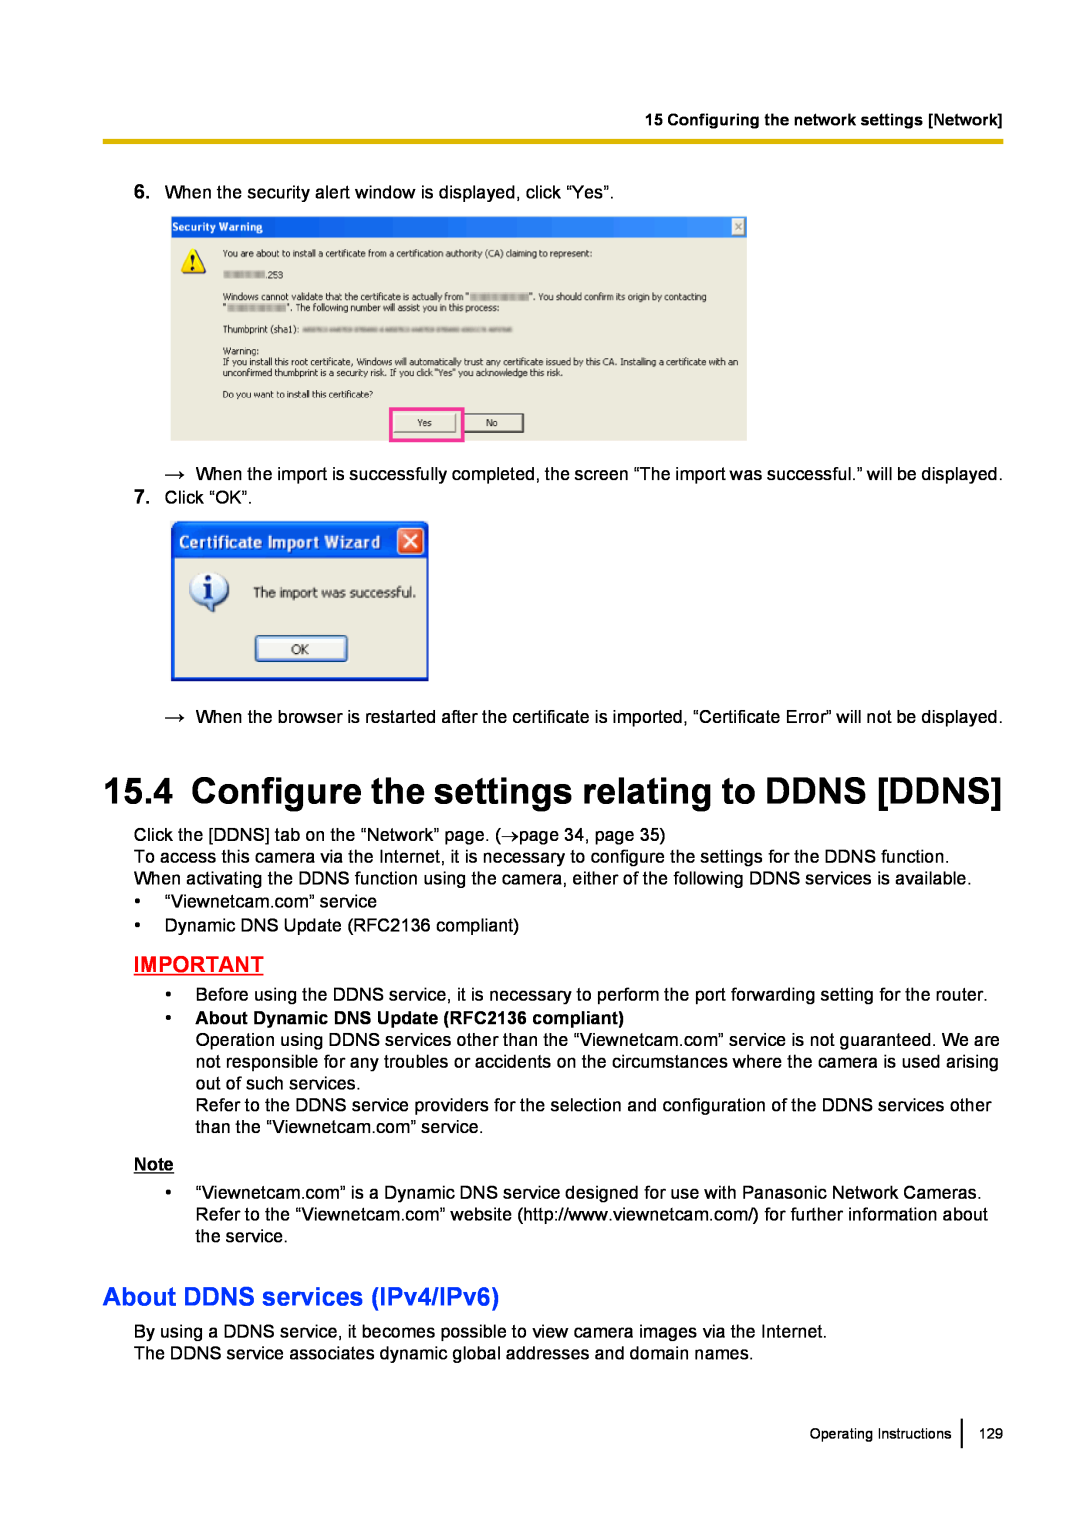 Panasonic BL-VT164W, BL-VP104W, BL-VP100 15.4Configure the settings relating to DDNS DDNS, About DDNS services IPv4/IPv6 